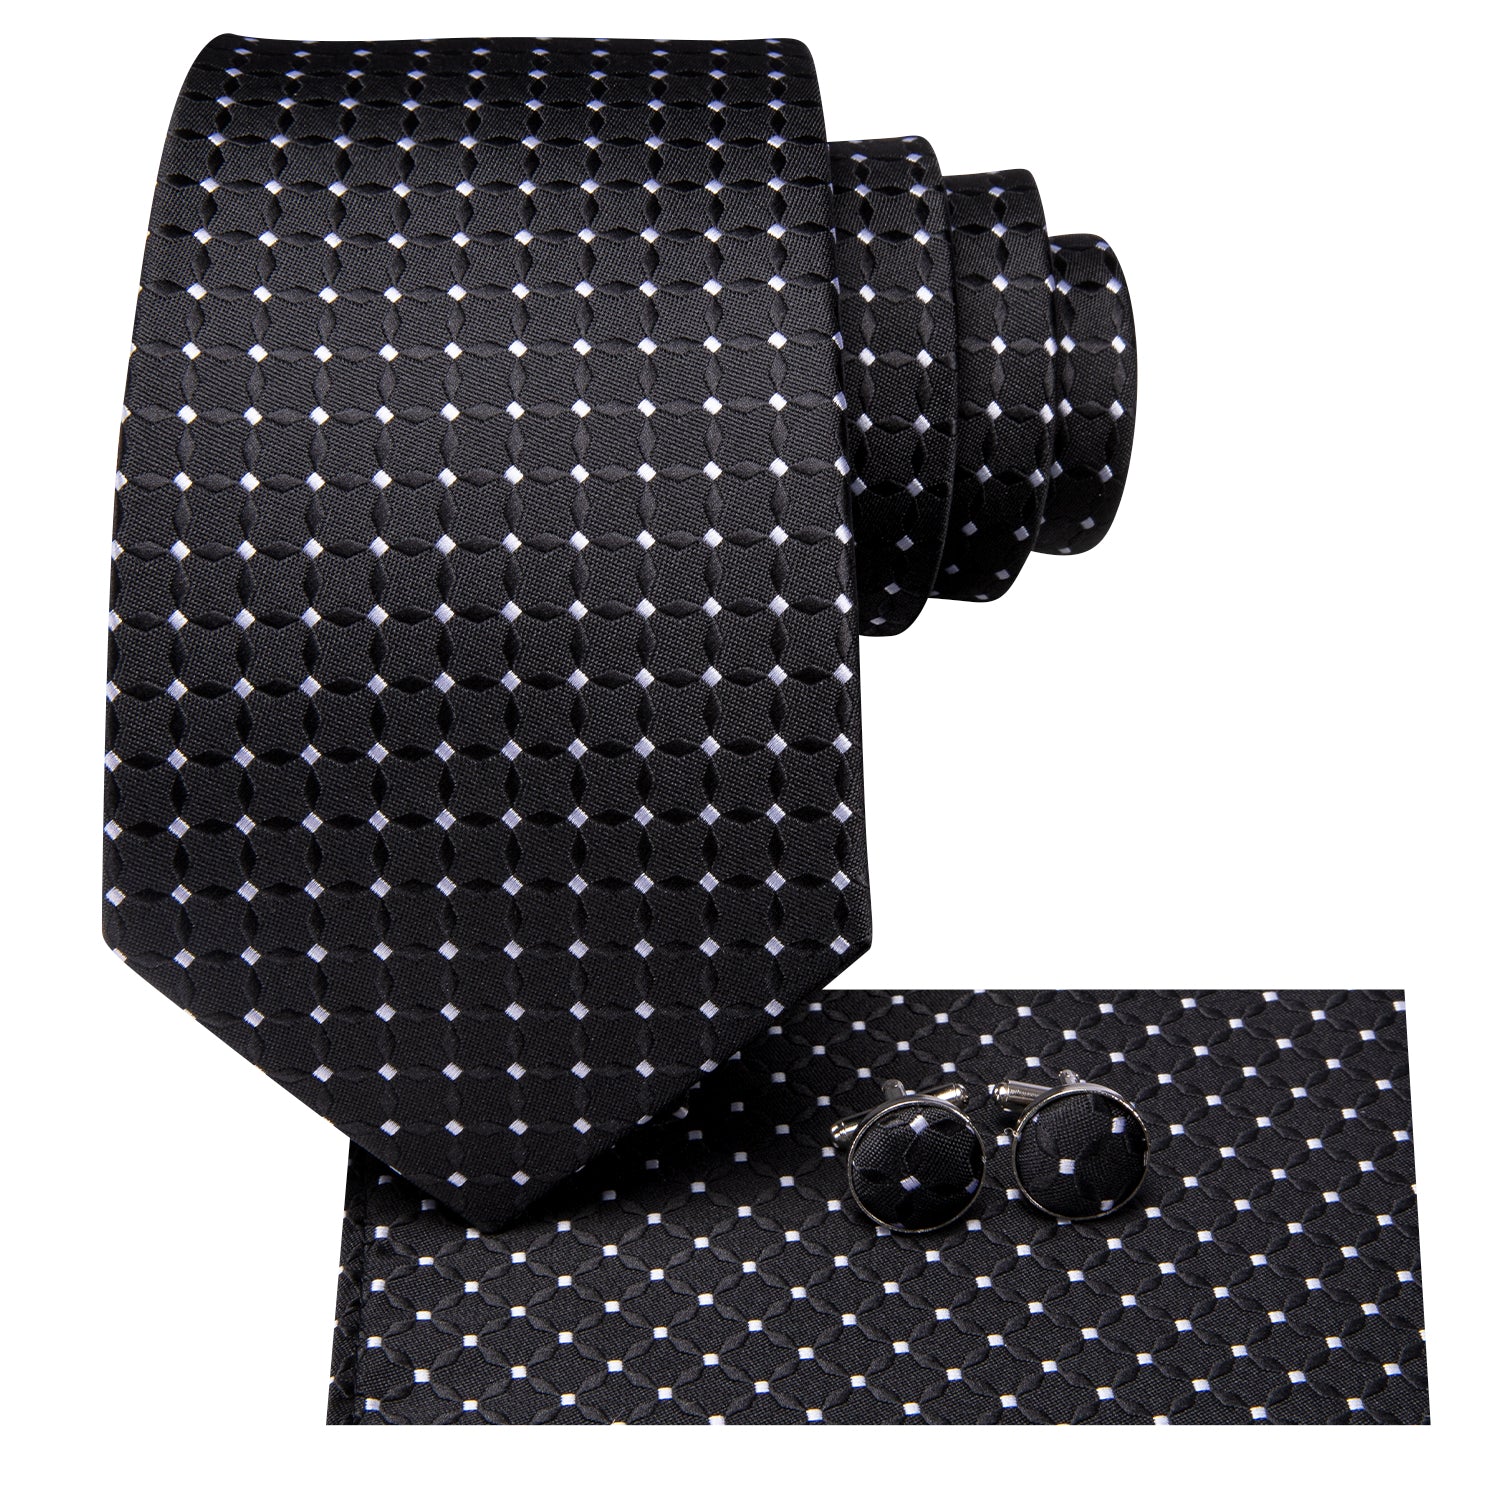 Hi-Tie Black White Novelty Men's Tie Pocket Square Cufflinks Set